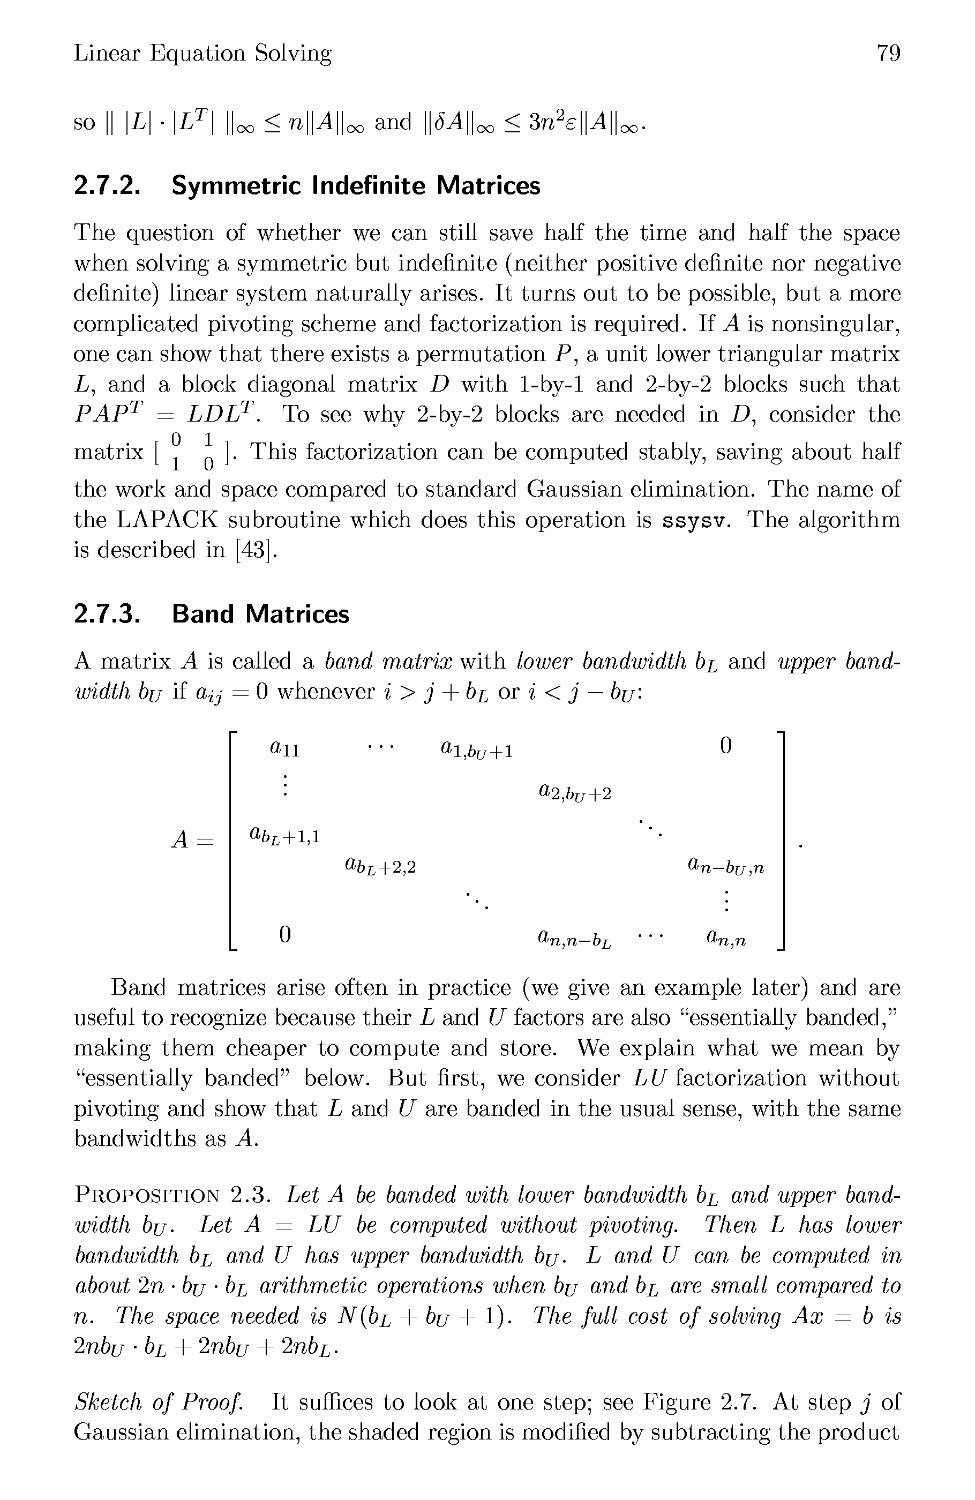 2.7.2 Symmetric Indefinite Matrices
2.7.3 Band Matrices